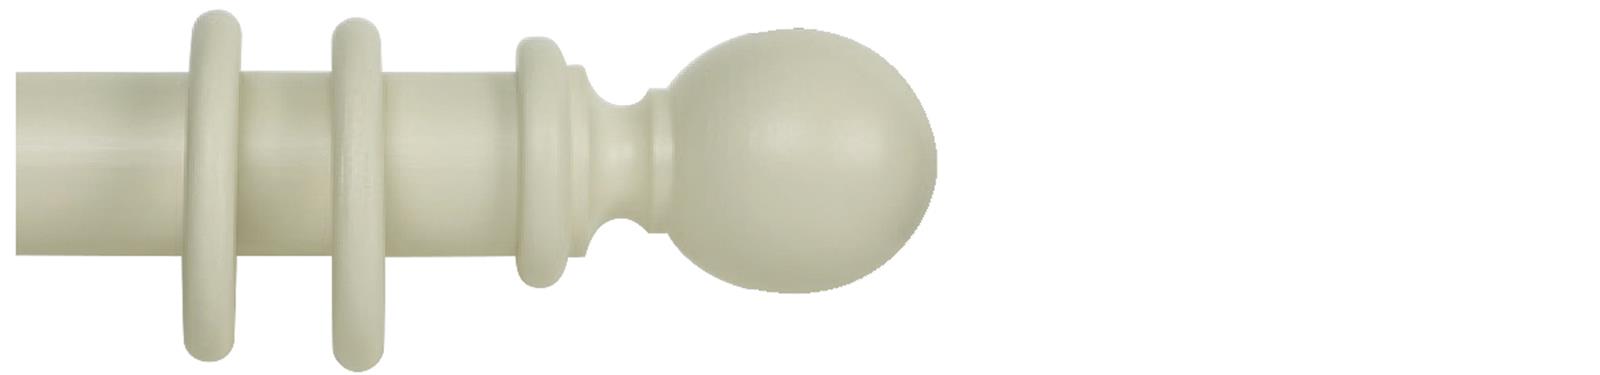 Cameron Fuller 35mm Pole Ivory Ball